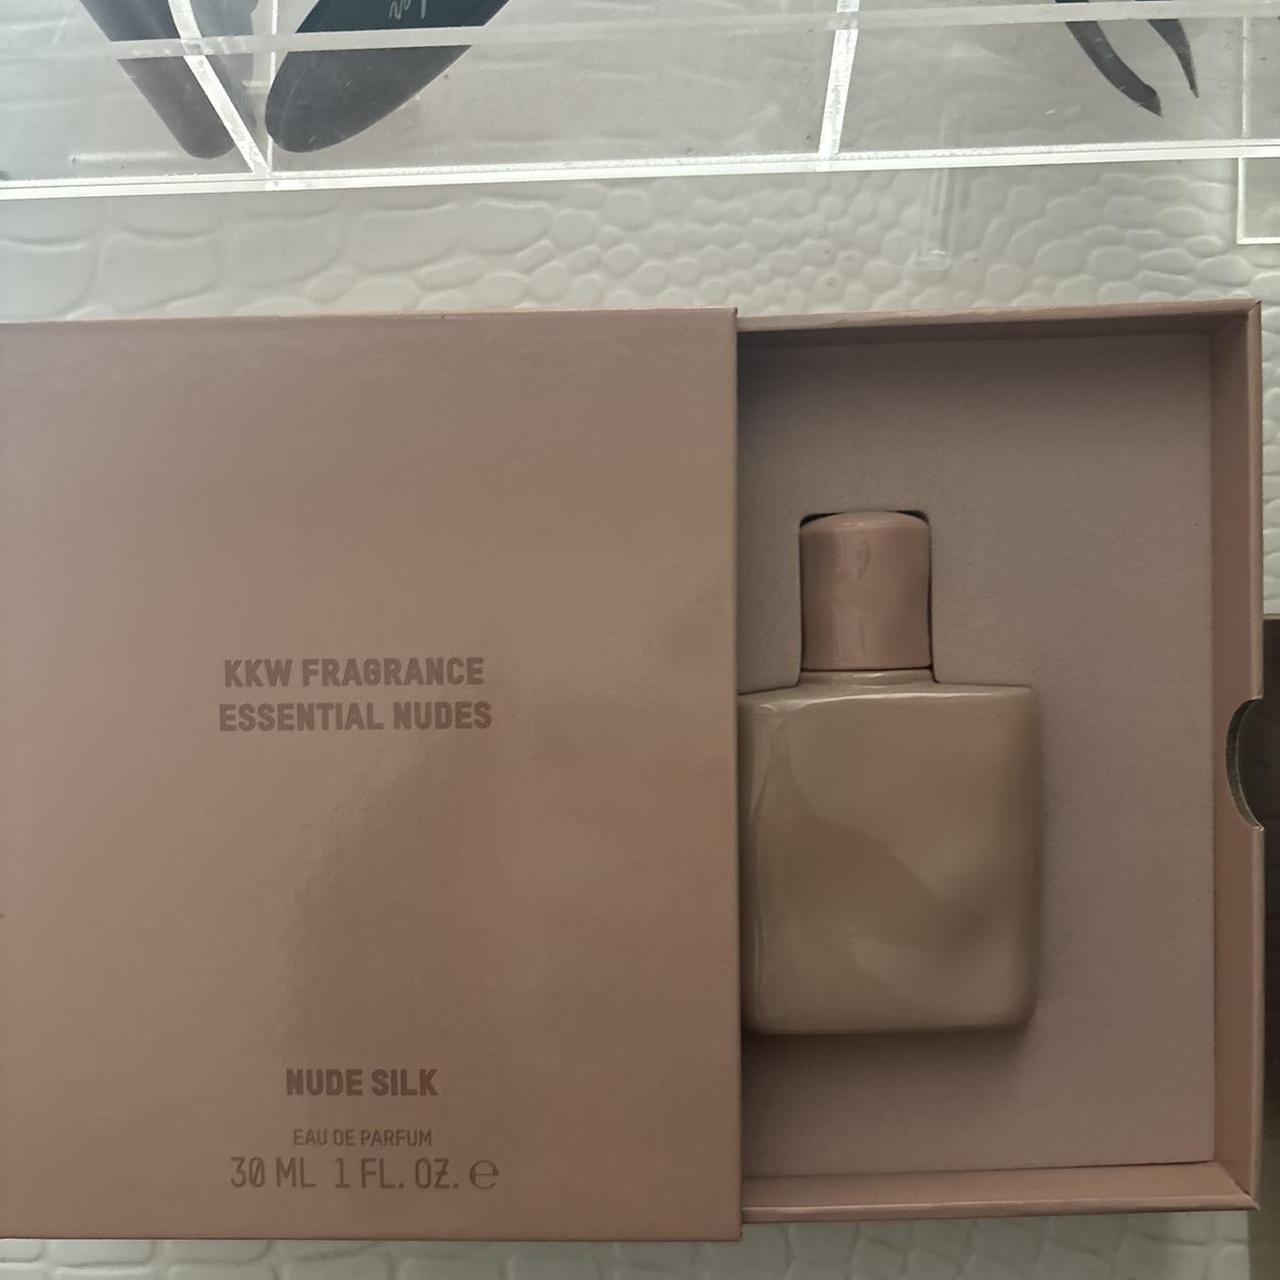 Silk Zara perfume - a fragrance for women